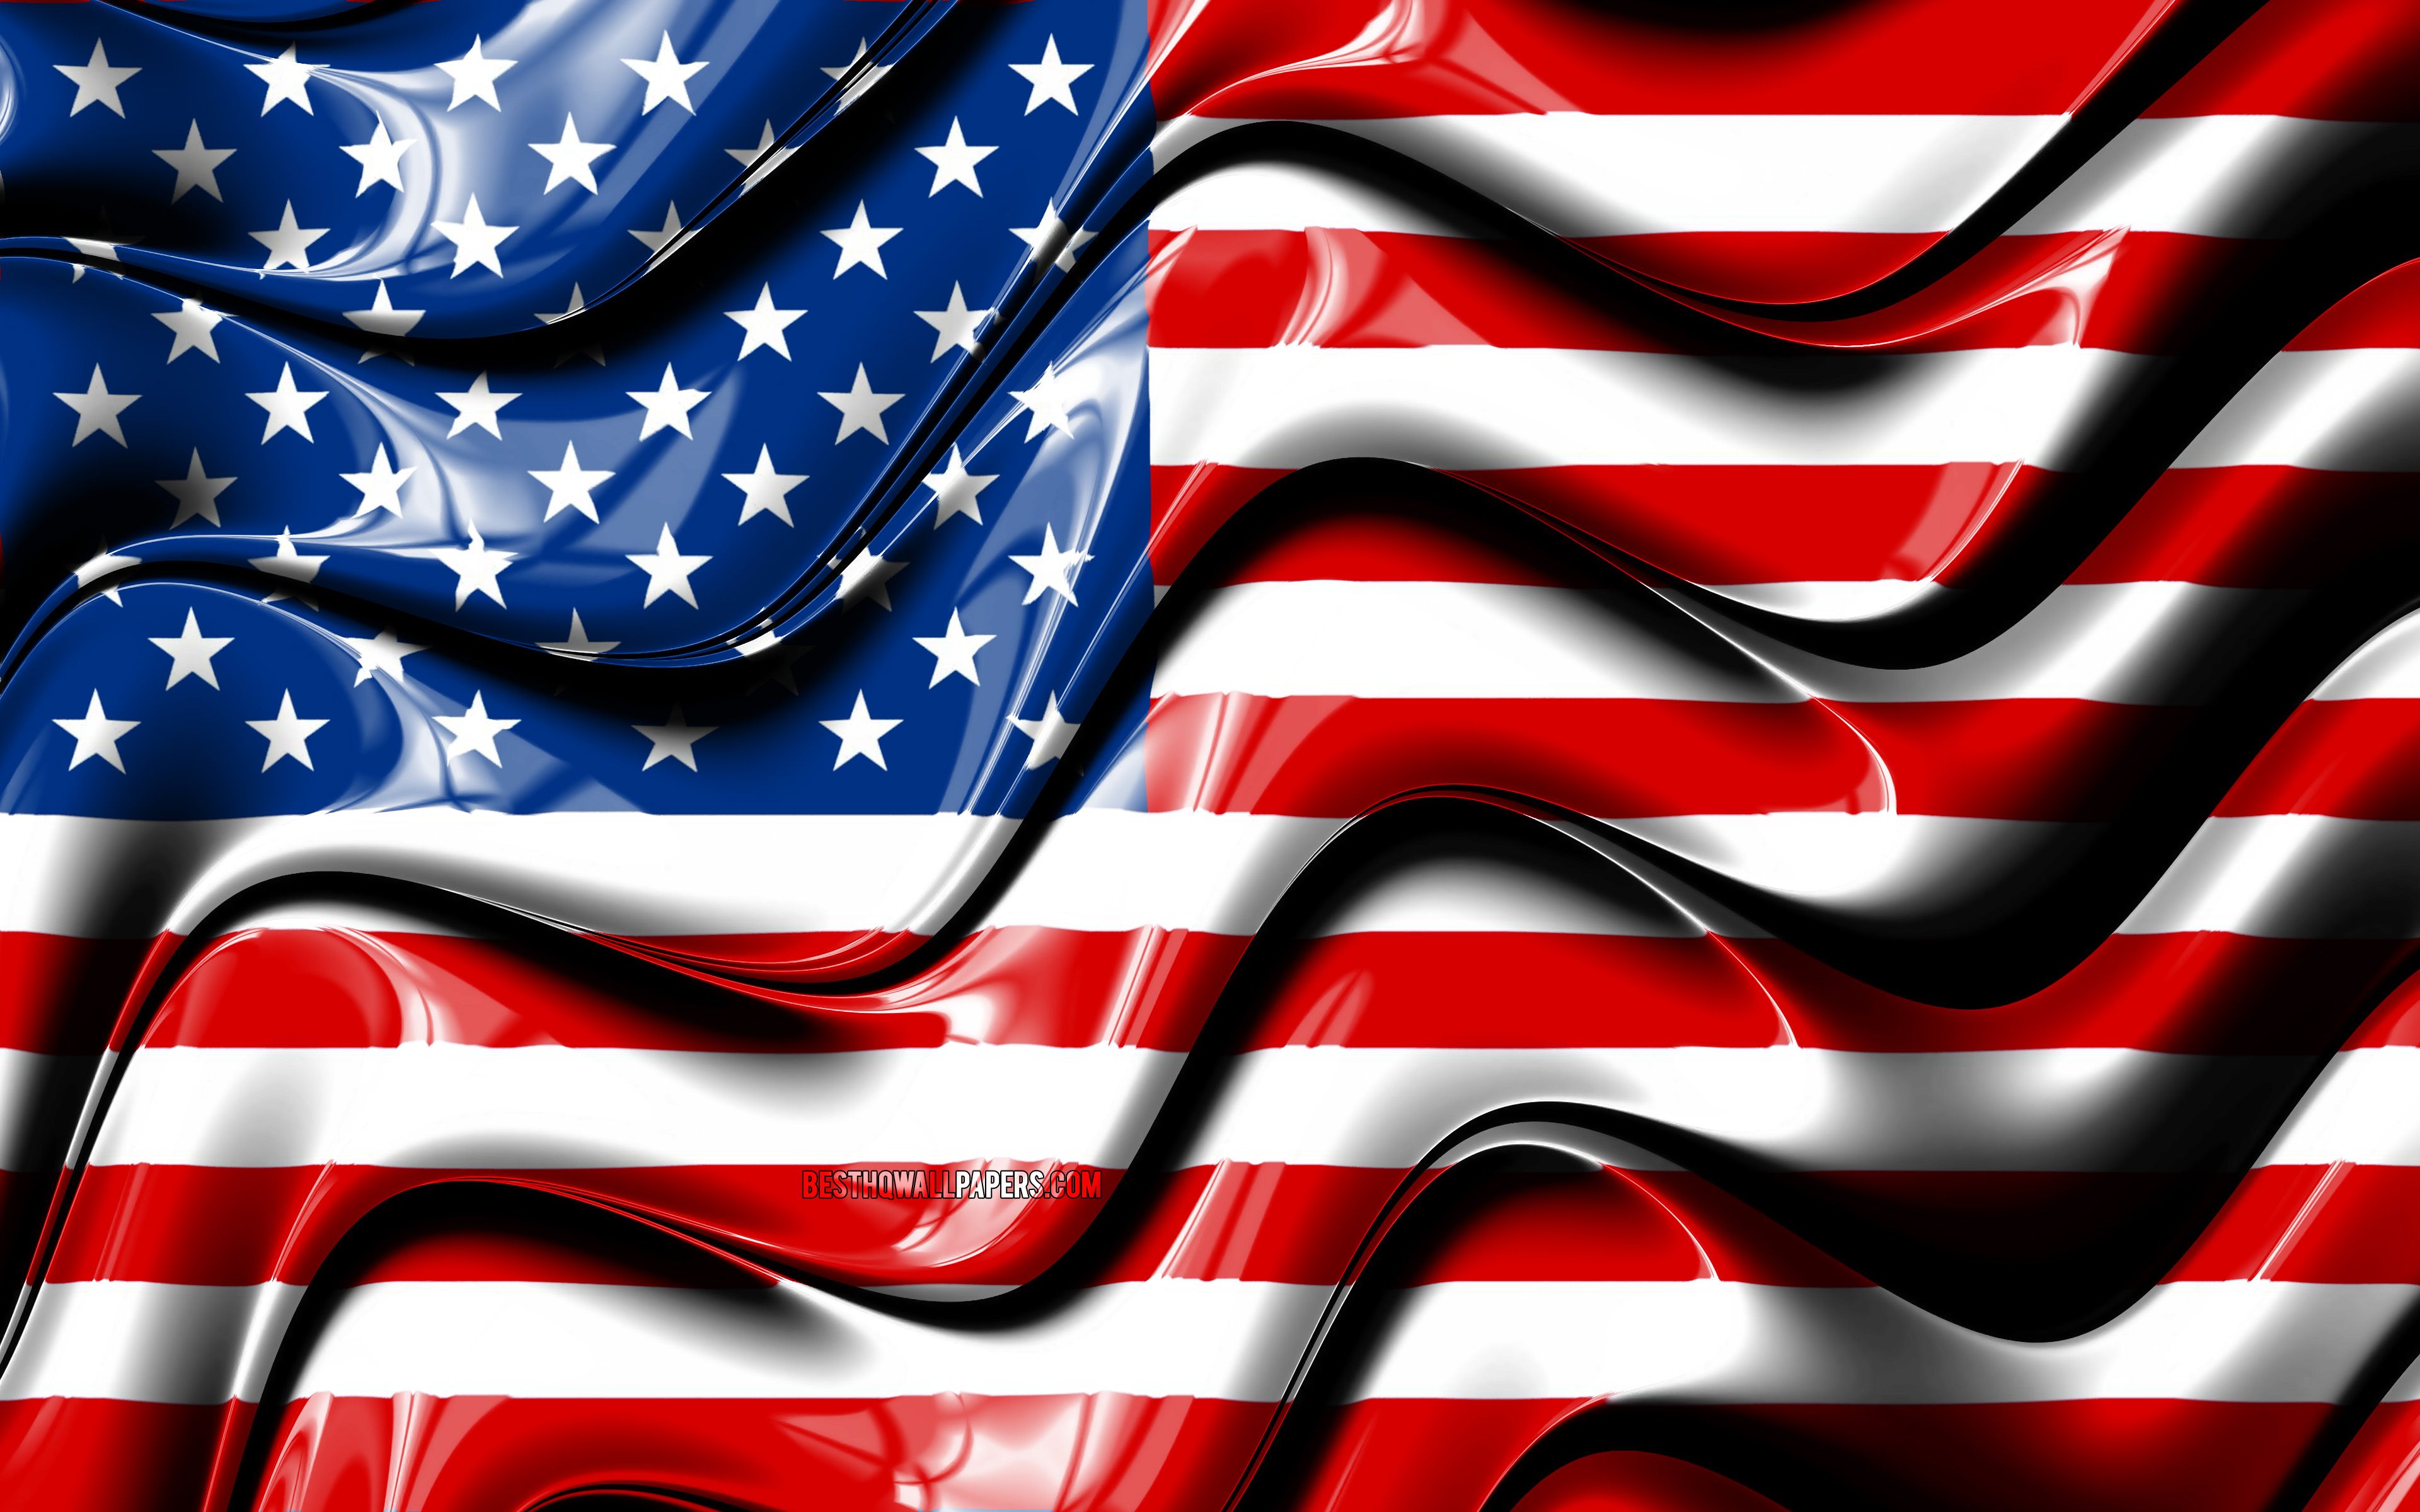 Download wallpaper USA flag, 4k, North America, national symbols, Flag of USA, 3D art, United States of America, USA, United States flag, North American countries, USA 3D flag, american flag for desktop